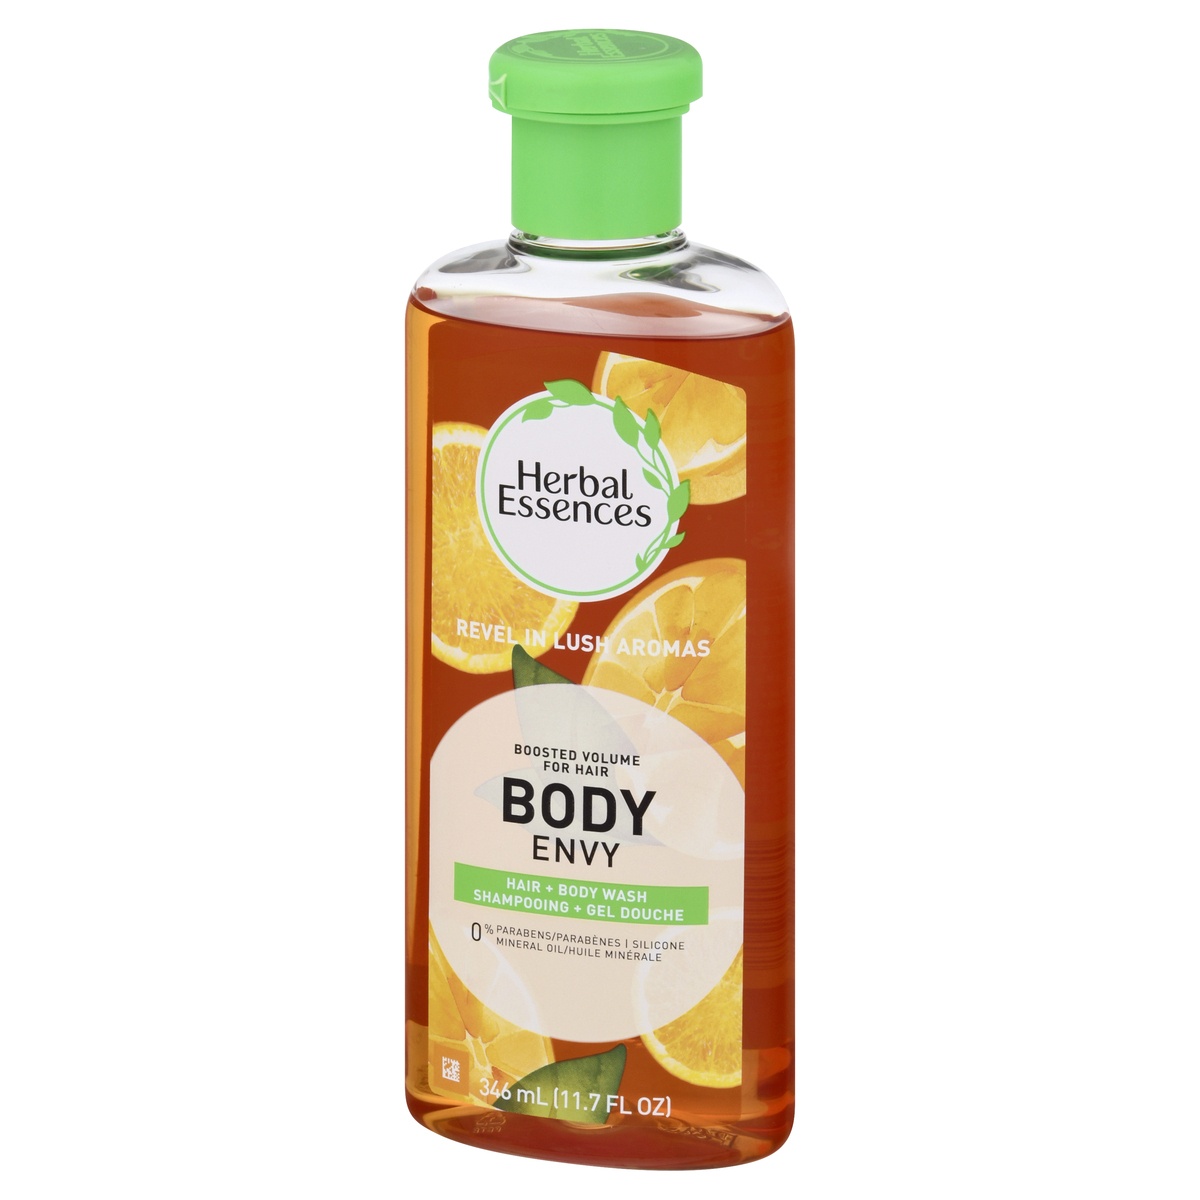 slide 3 of 10, Herbal Essences Body Envy Citrus Essences Hair + Body Wash 346 ml, 11.7 oz